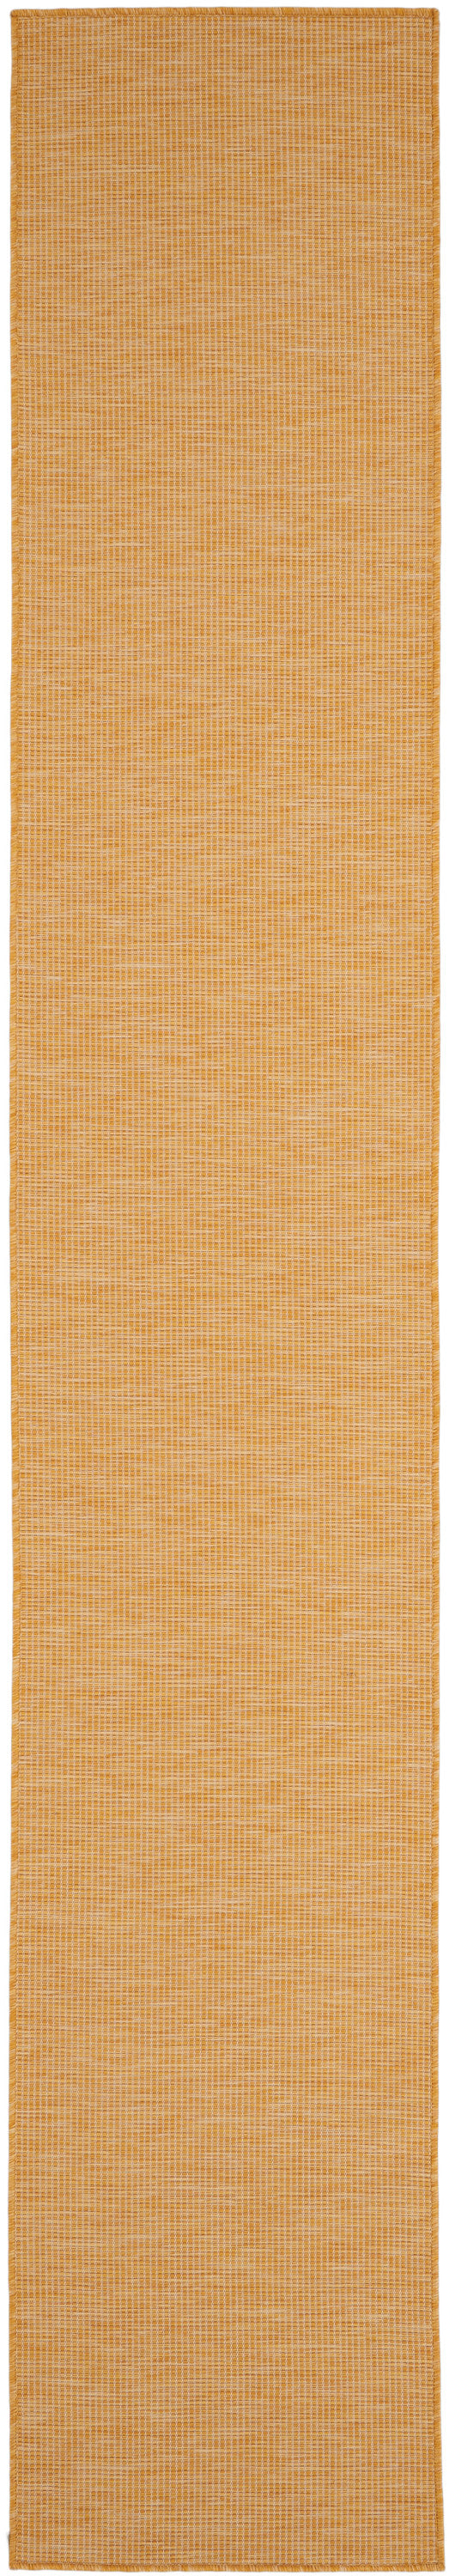 media image for positano yellow rug by nourison 99446842442 redo 3 258